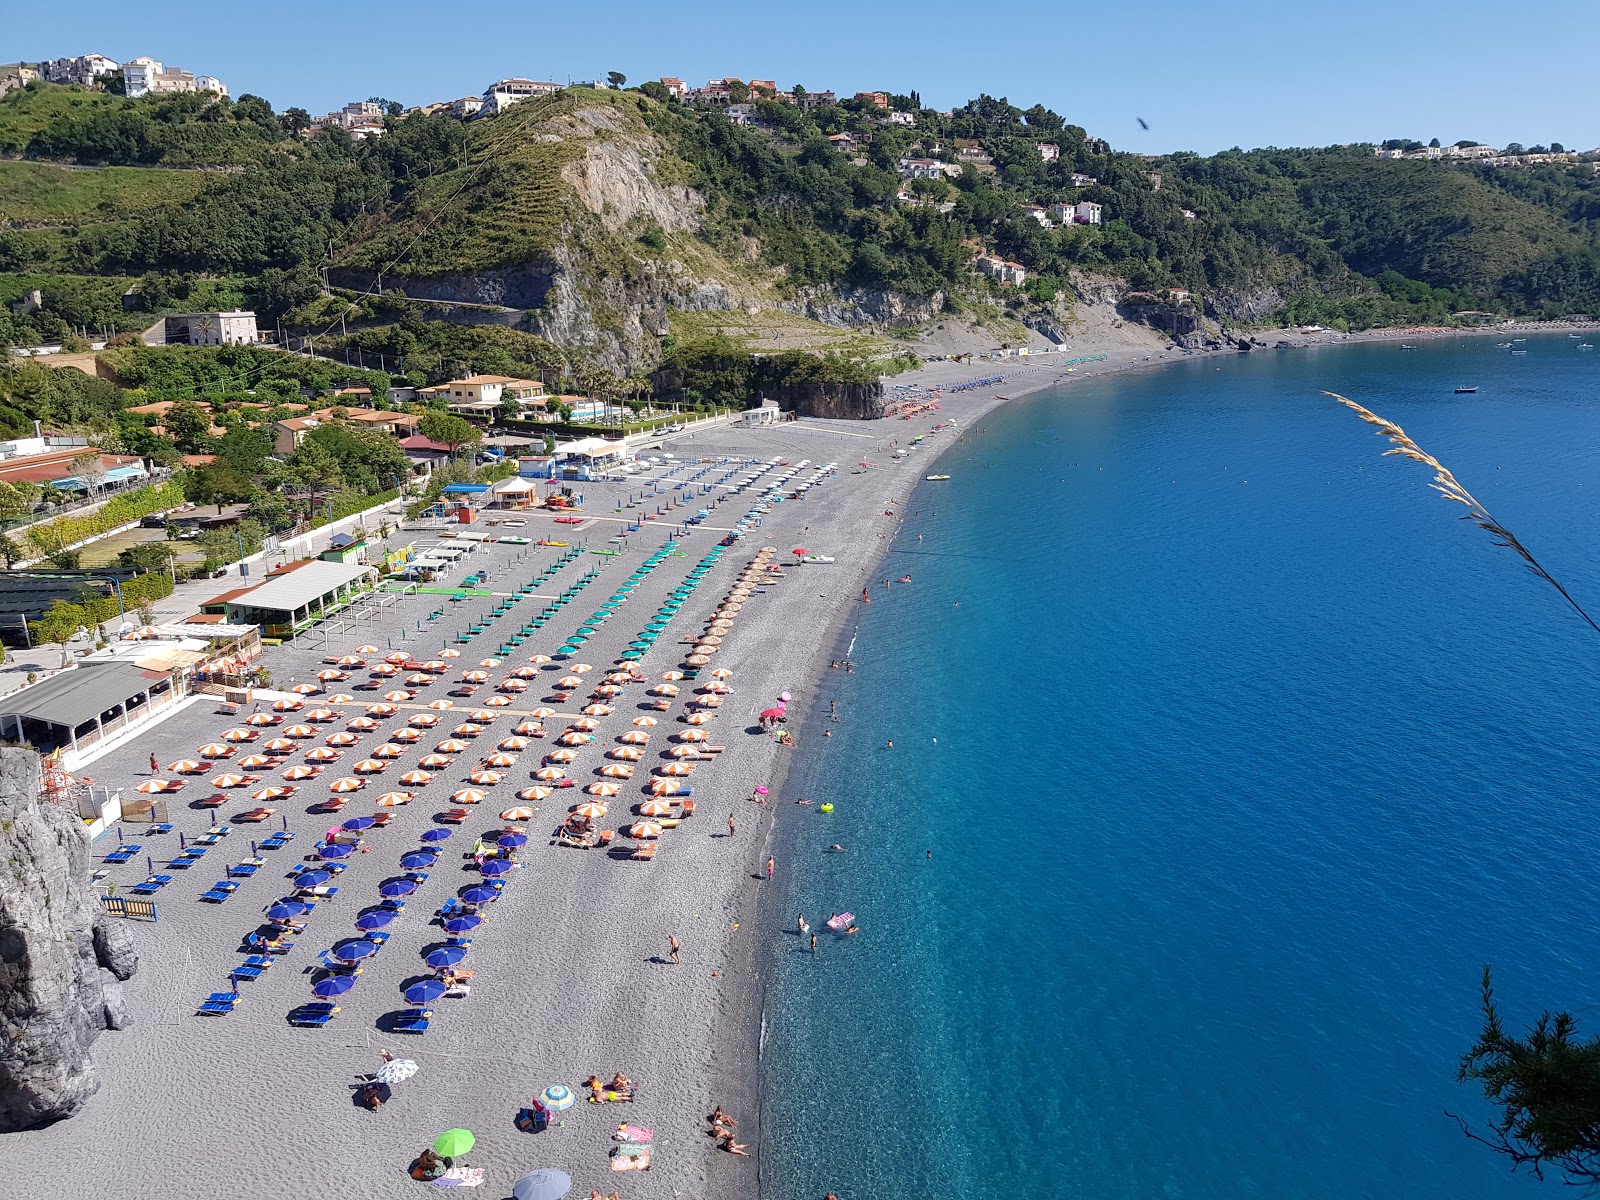 Foto de Spiaggia San Nicola Arcella com praia espaçosa